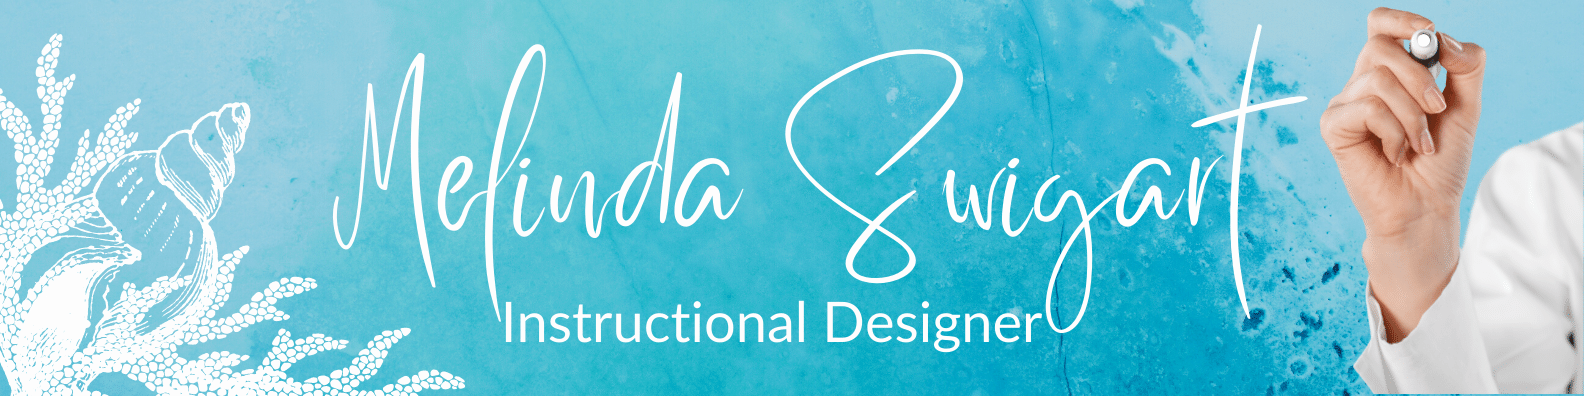 Melinda Swigart Instructional Designer